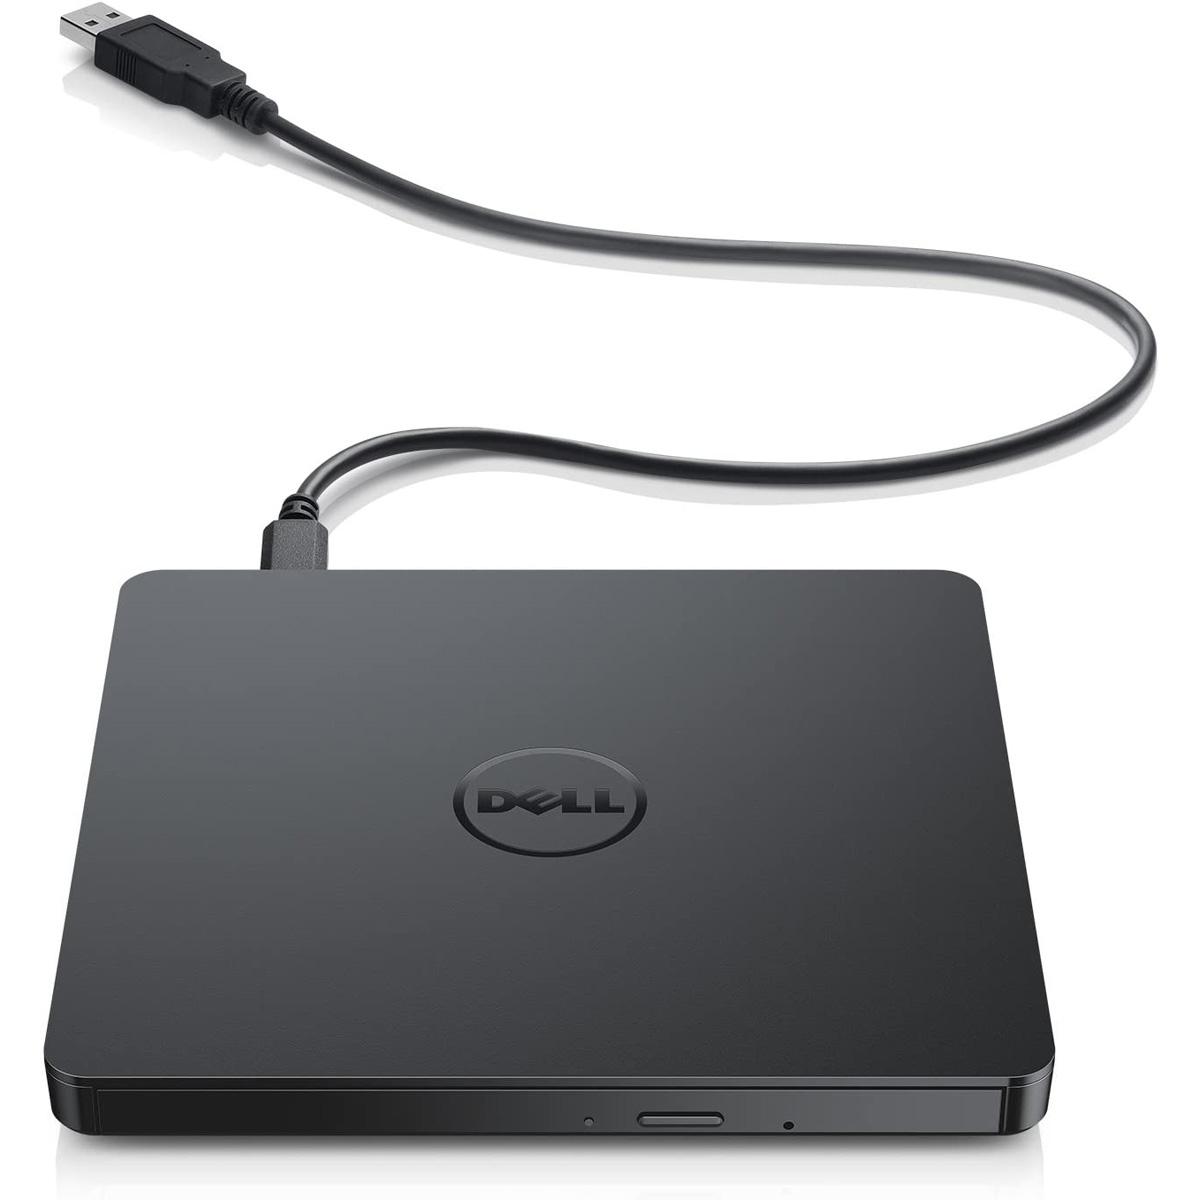 Dell USB Slim External DVDRW Drive for $15.99